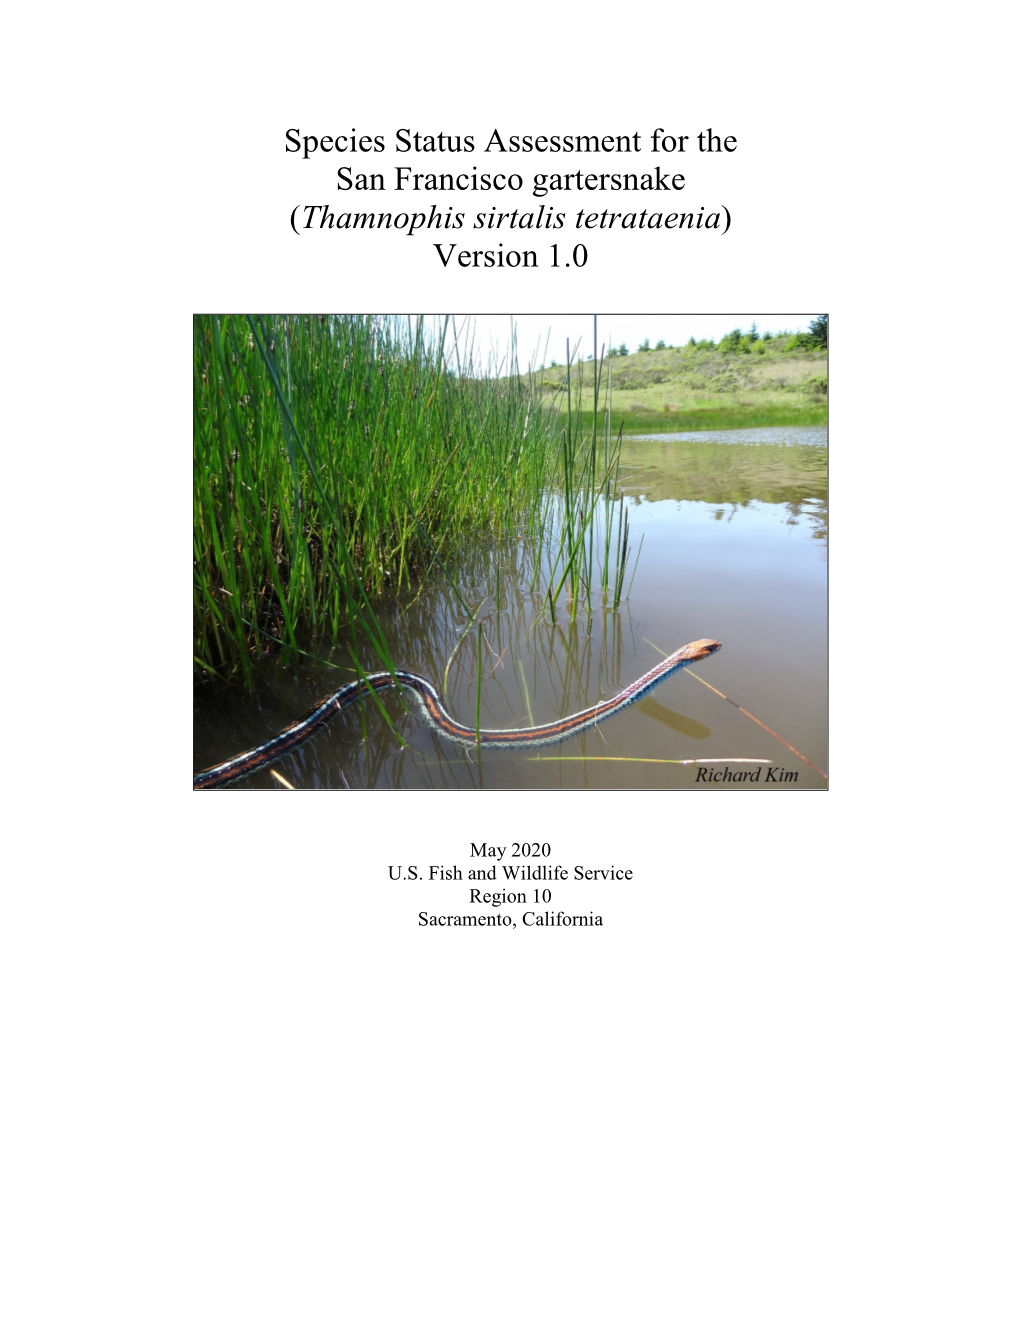 Species Status Assessment for the San Francisco Gartersnake (Thamnophis Sirtalis Tetrataenia) Version 1.0